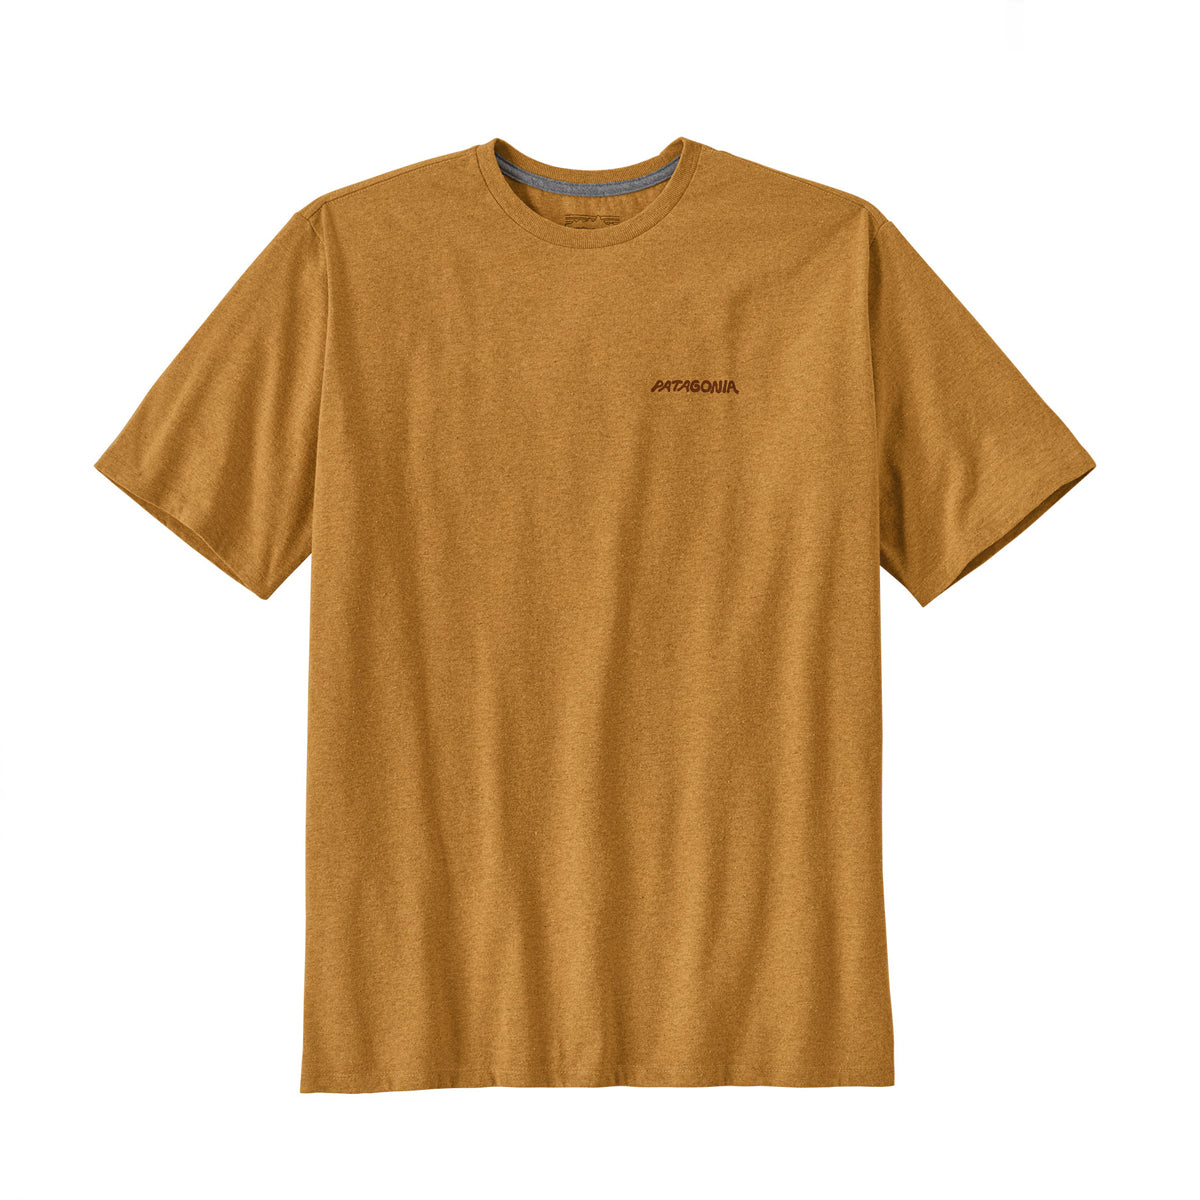 Patagonia - T-Shirt Sunrise Rollers Responsibili-Tee® Pufferfish Gold - 37718 - PUFFERFISH/GOLD